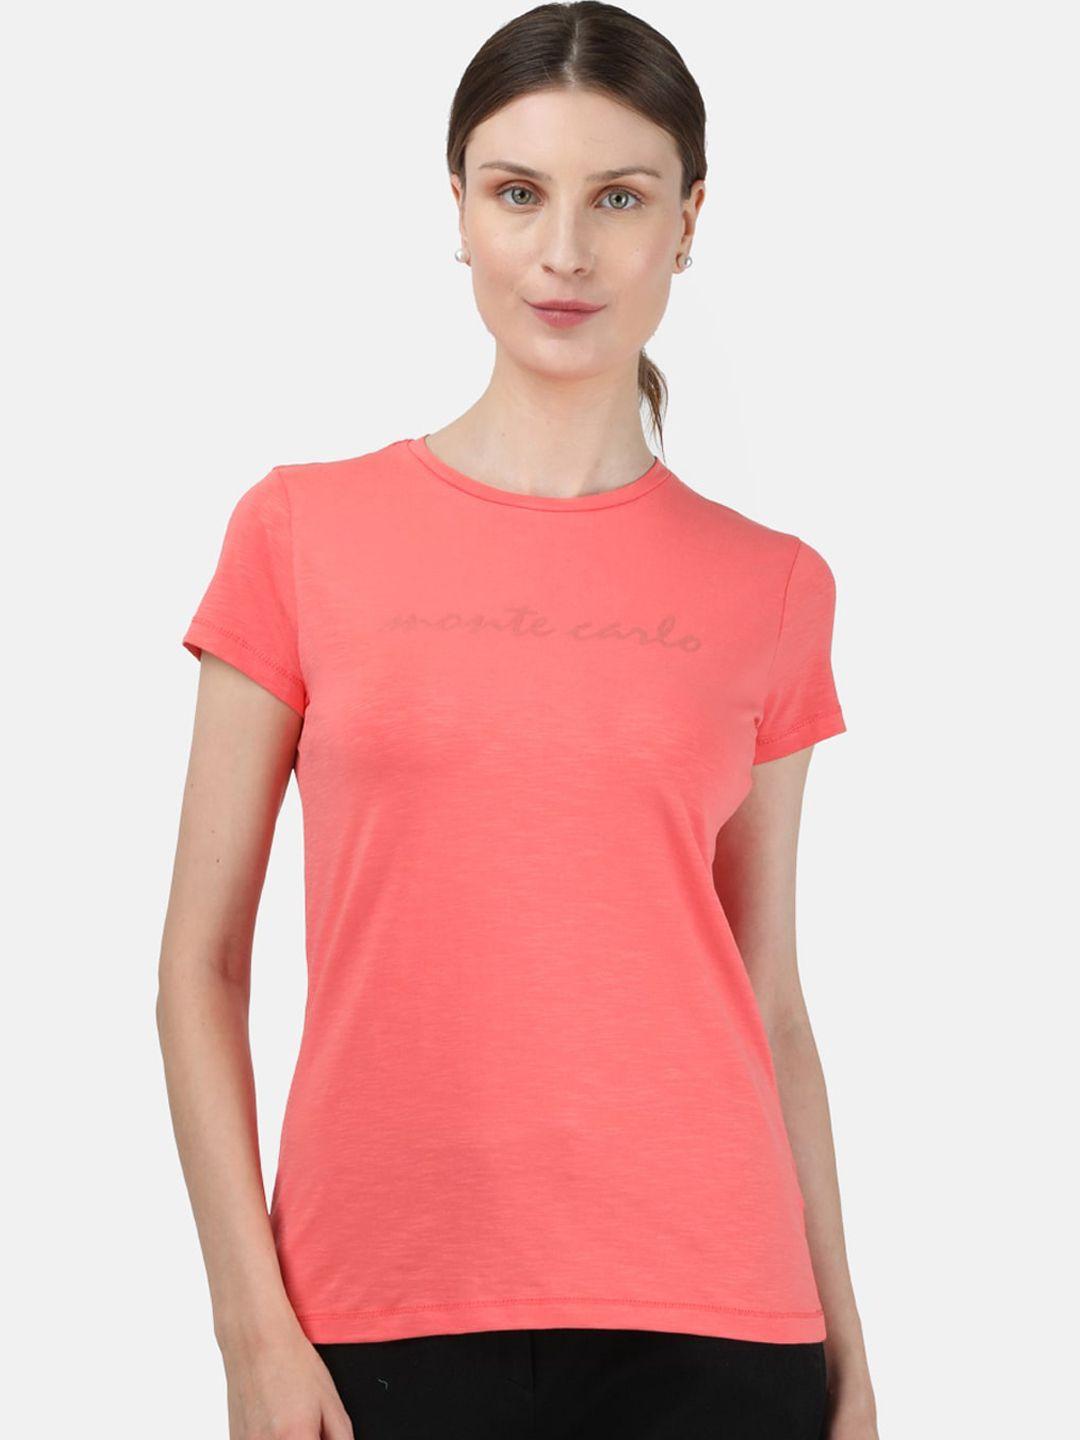 monte carlo women coral pink printed round neck t-shirt